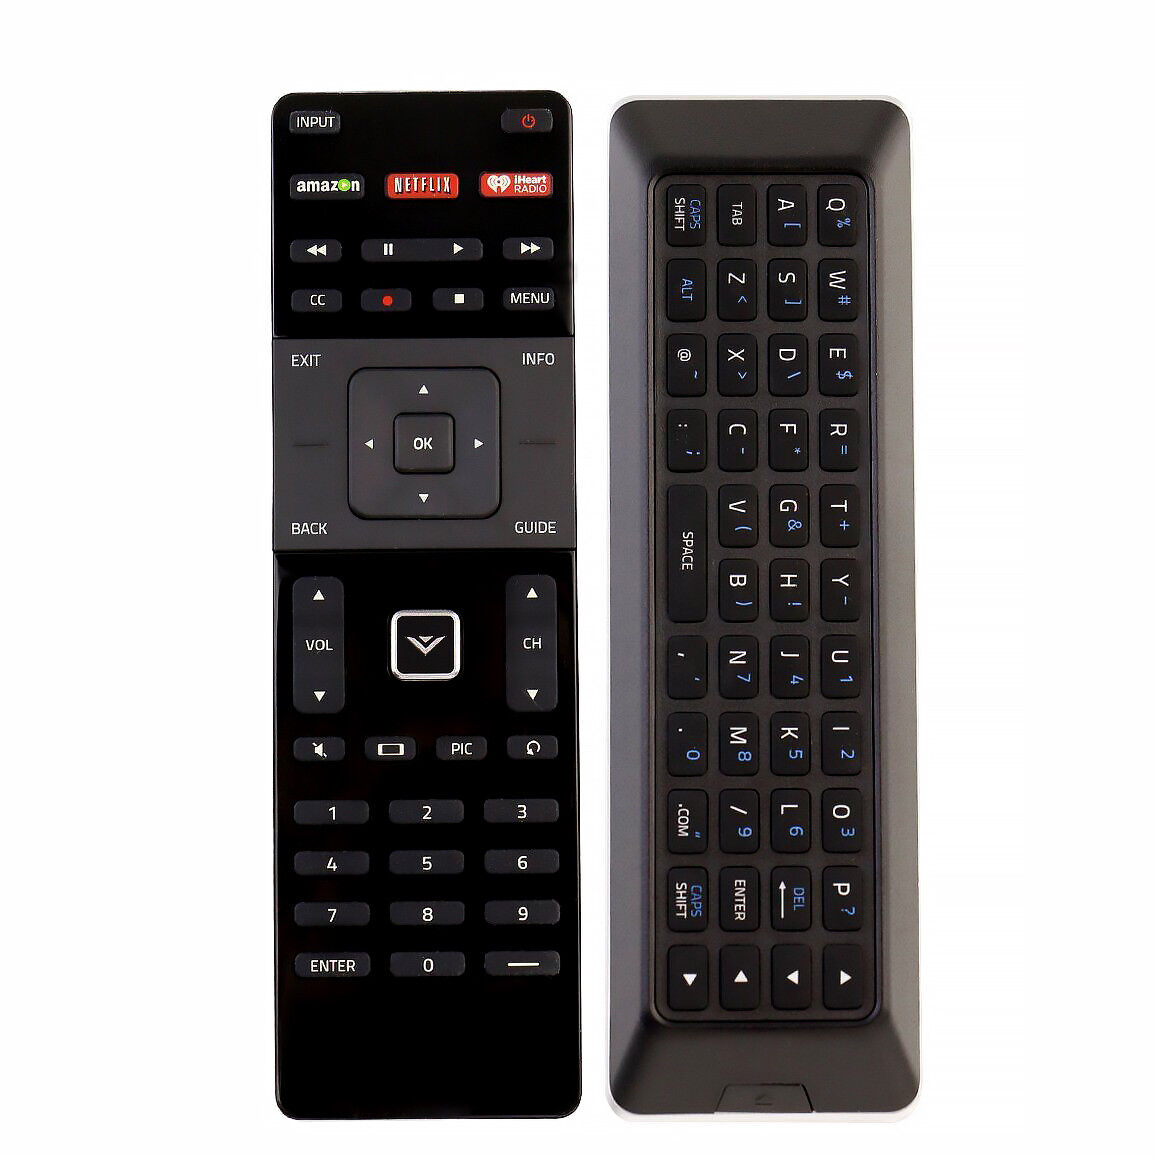 New XRT500 LED remote Control with QWERTY keyboard backlight for VIZIO Smart TV Vizio XRT500 - фотография #2